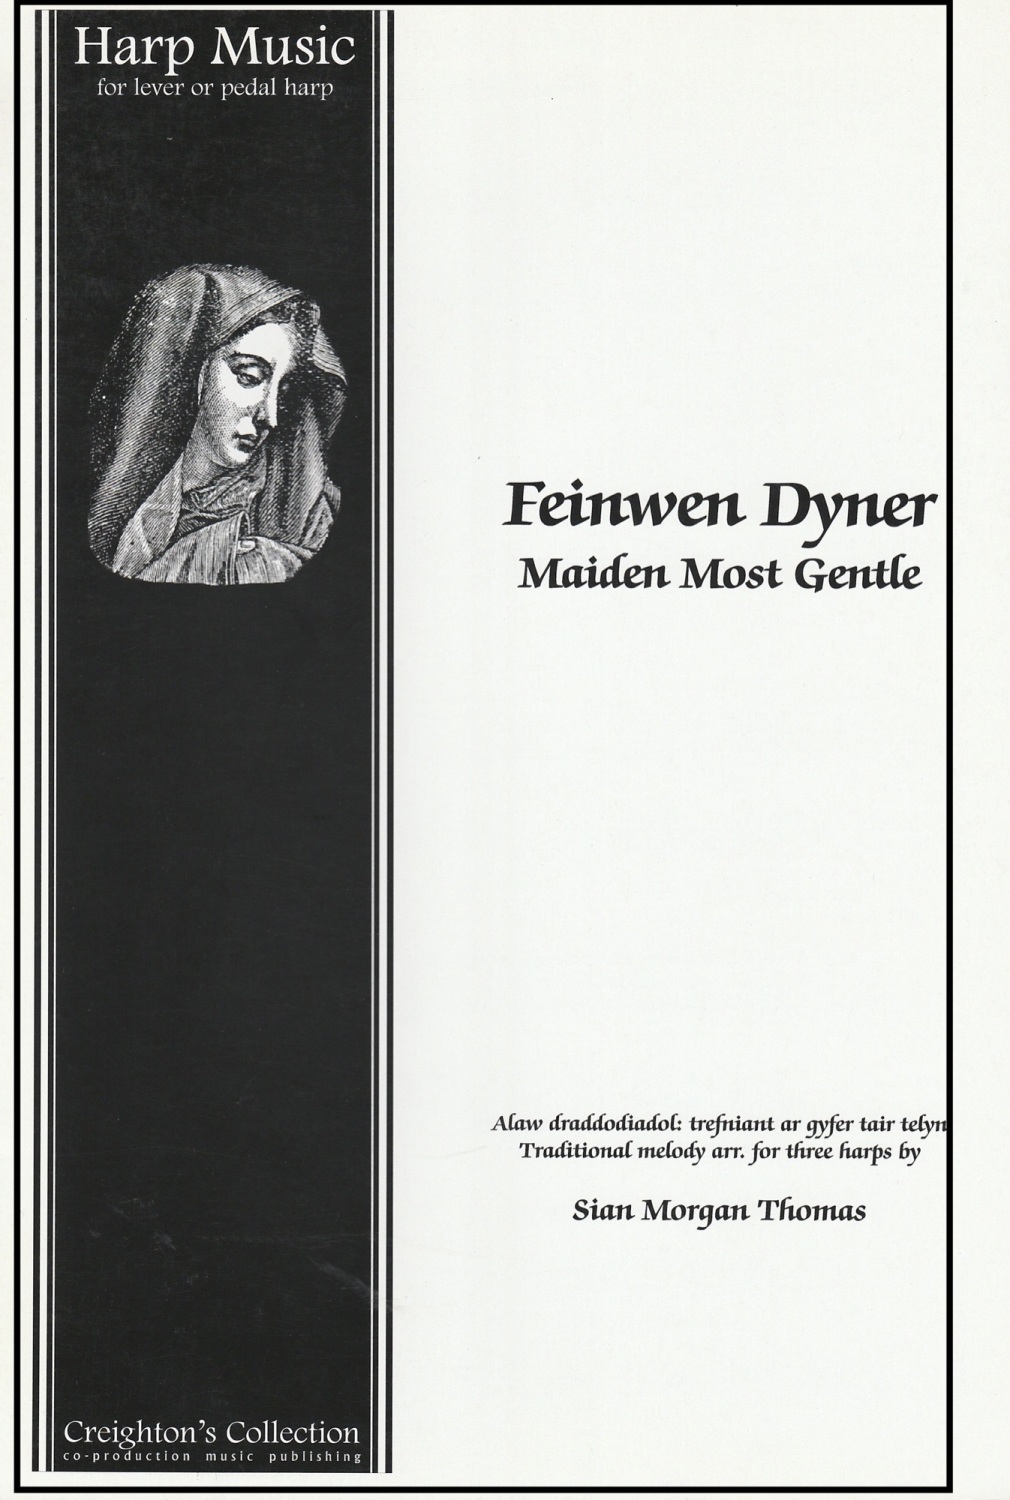 Feinwen Dyner - Maiden Most Gentle - arr. Sian Morgan Thomas